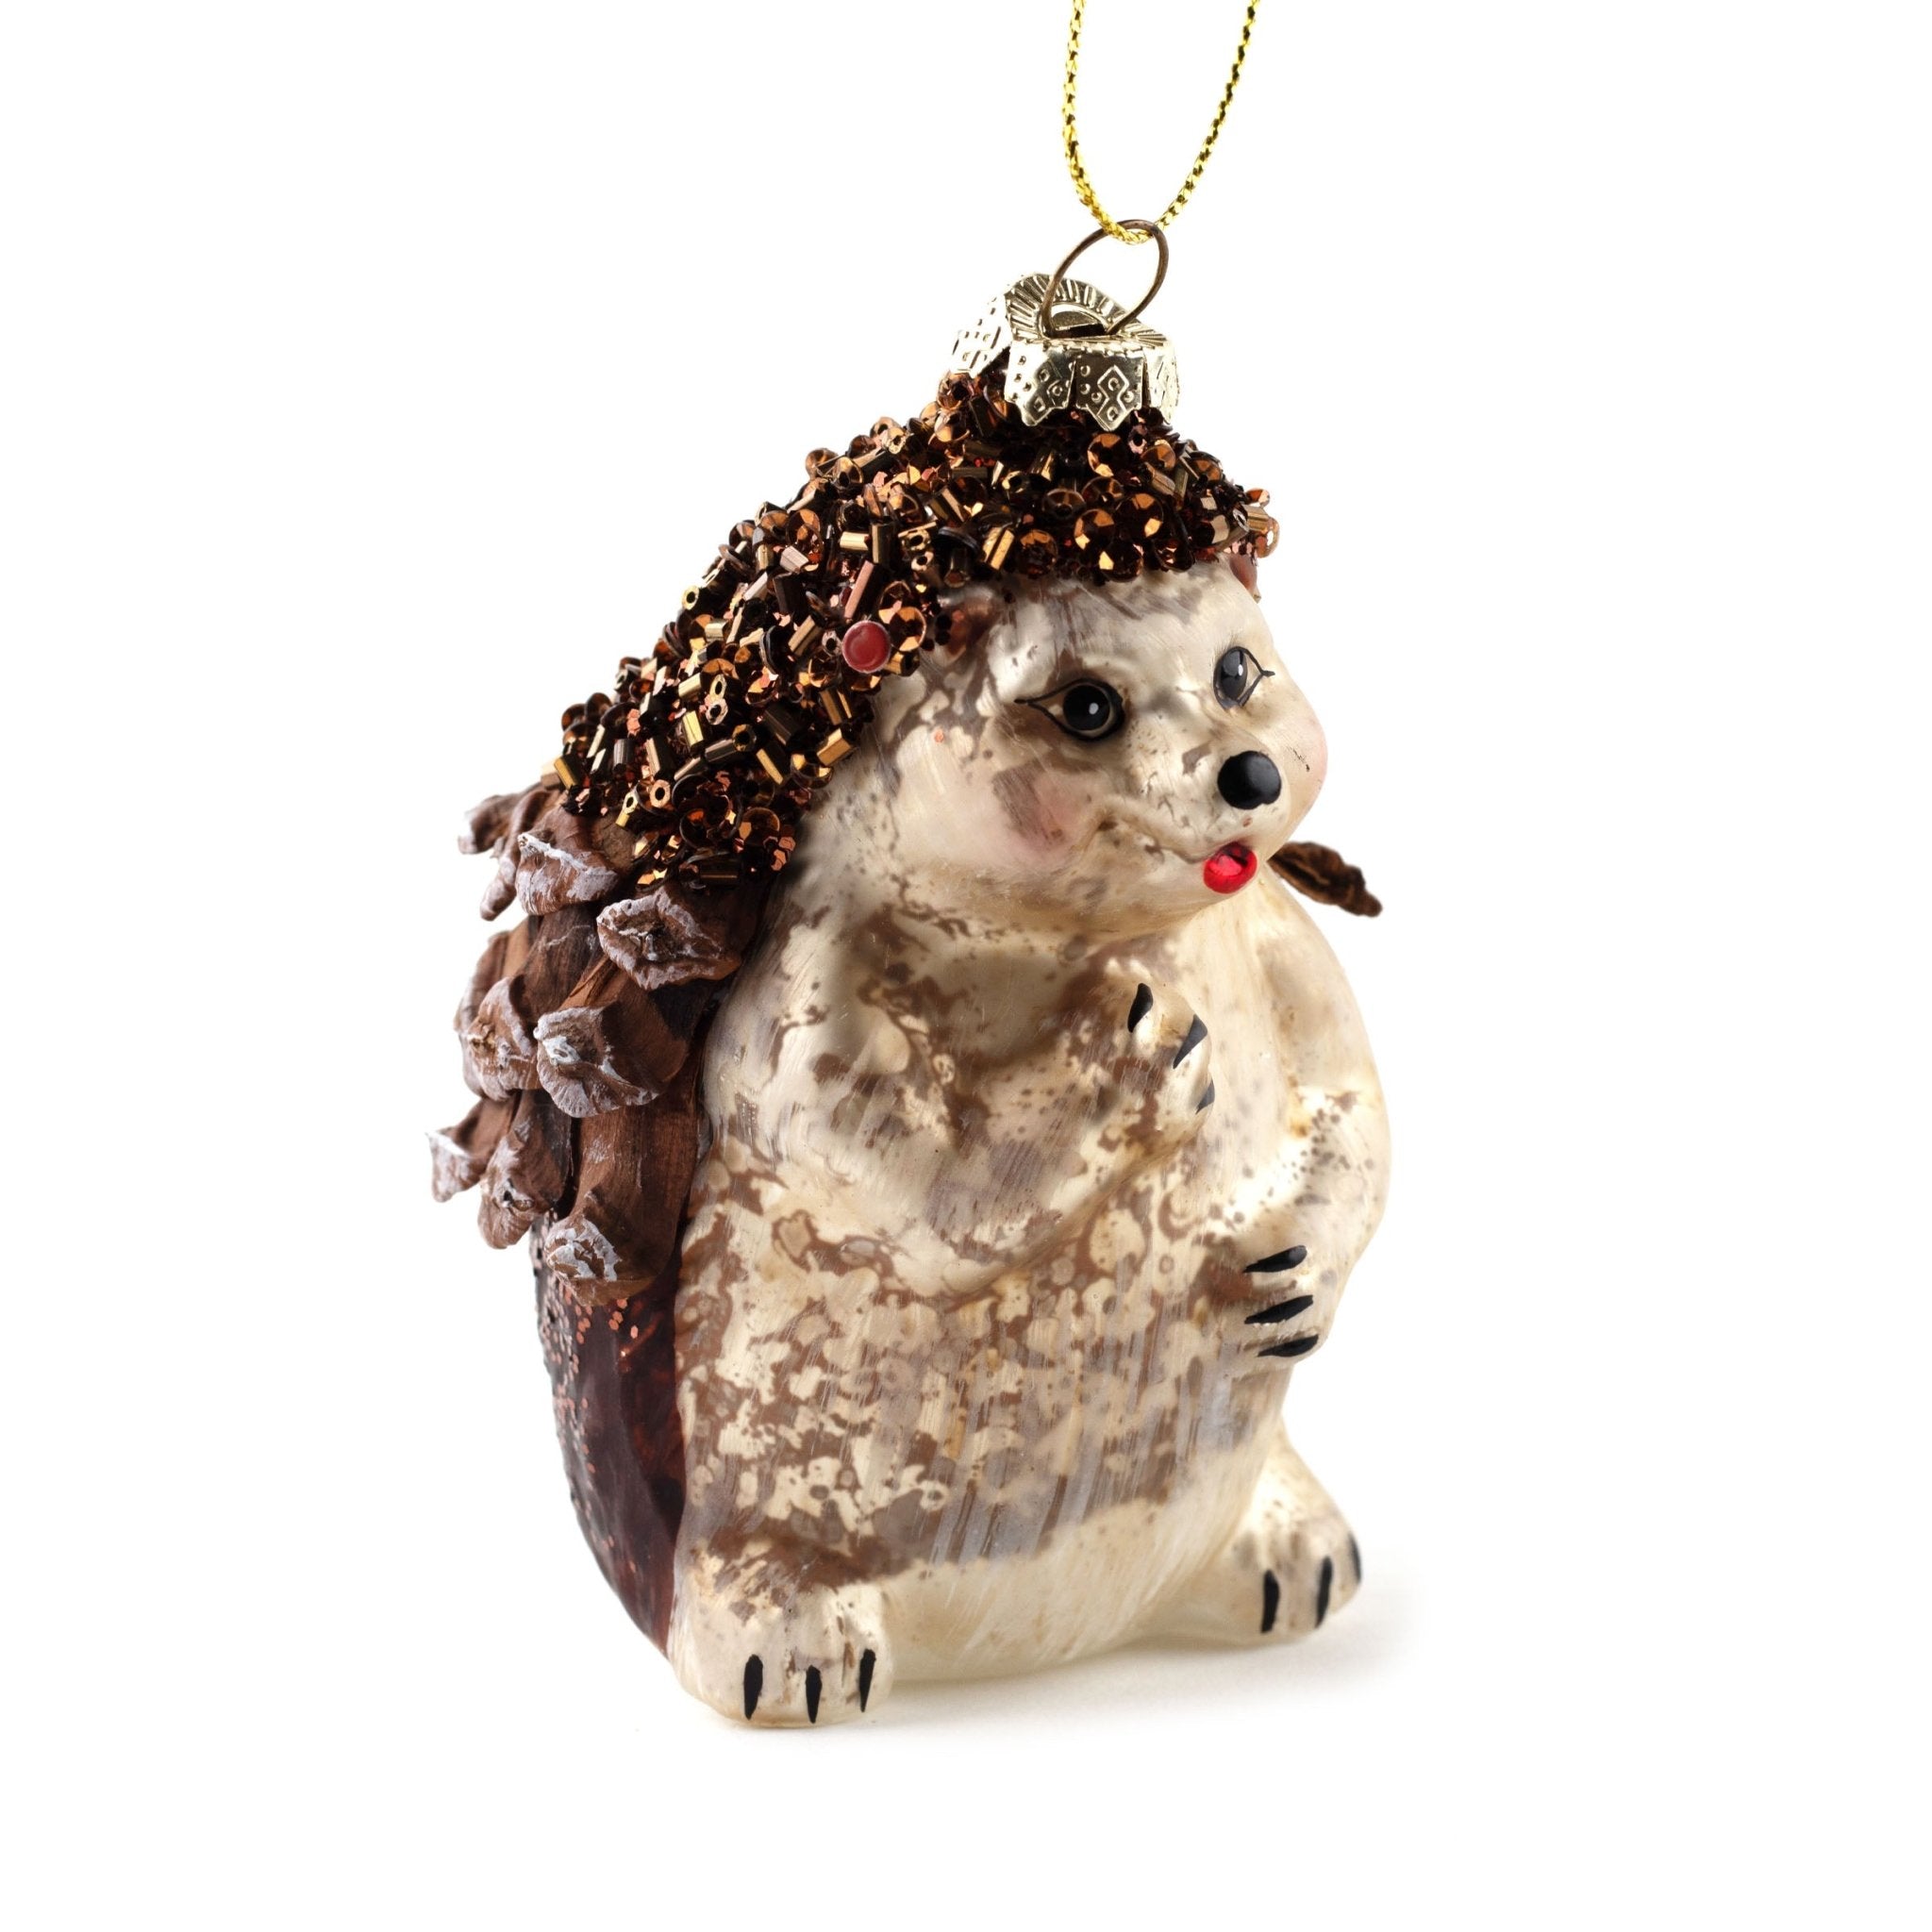 10cm Hedgehog Glass Ornament OGS024 - MODA FLORA Santa's Workshop